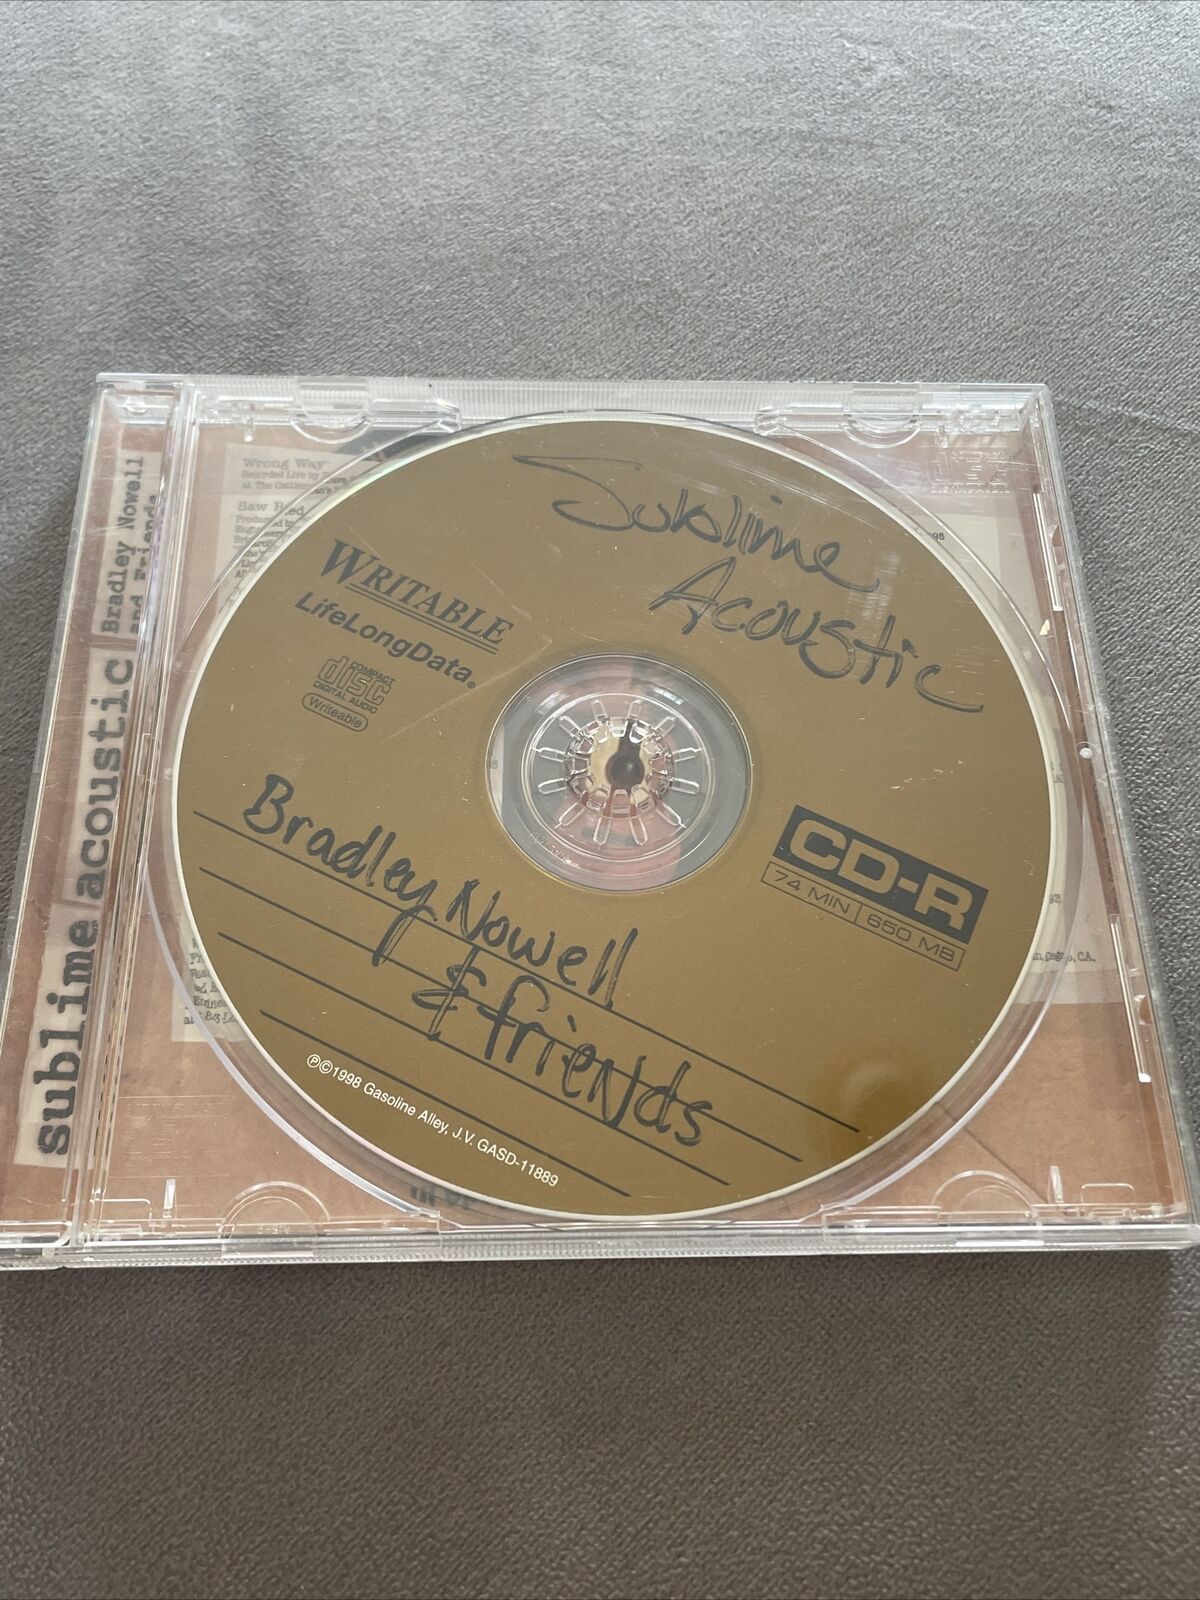 Sublime Acoustic Bradley Nowell & Friends CD 1998 Gasoline Alley Music  Rock